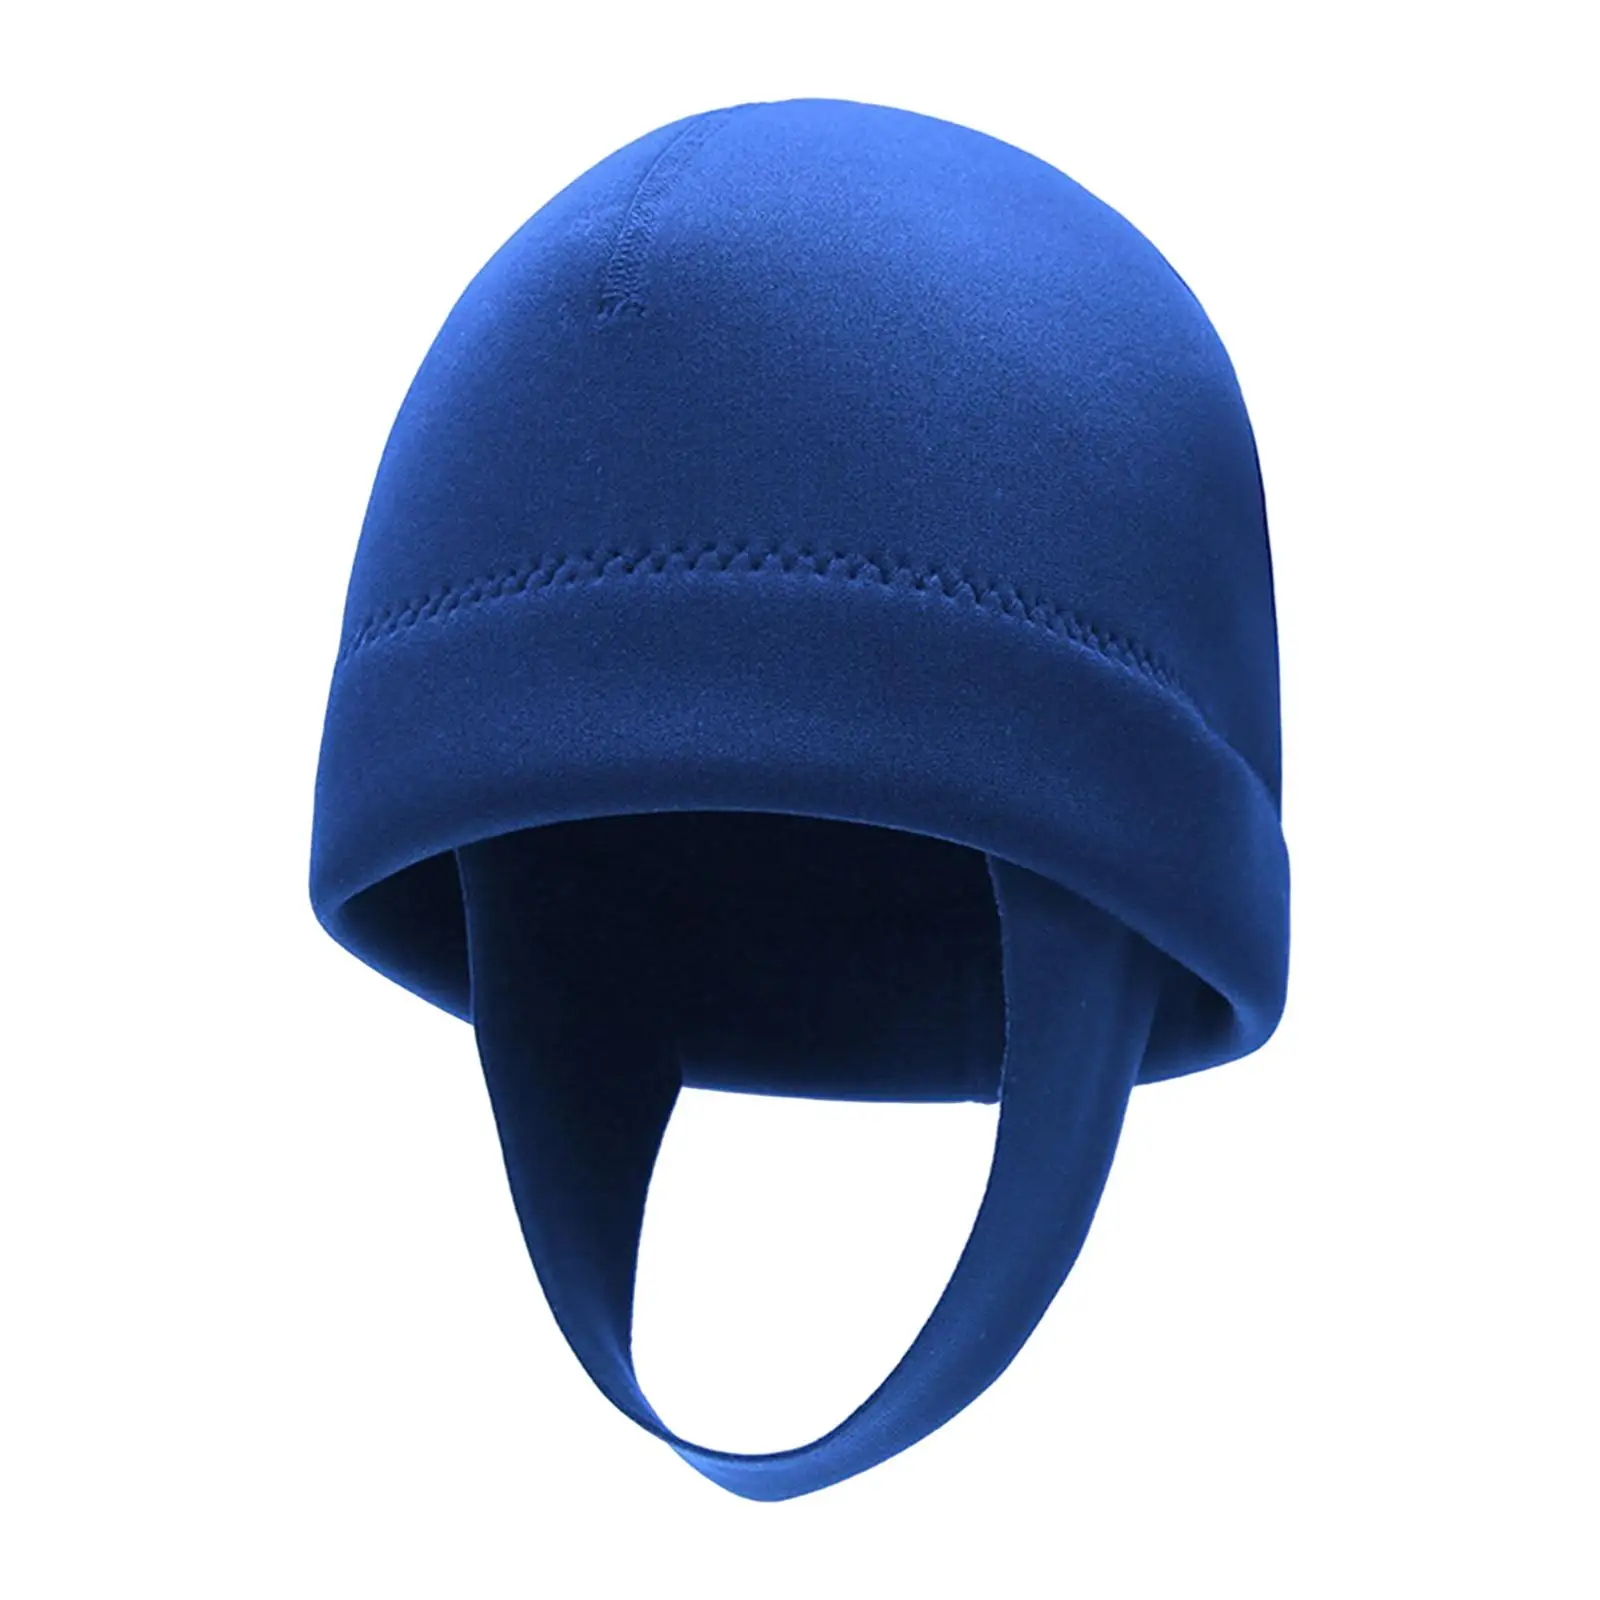 Diving Hood 2mm Neoprene Wetsuit Hood Headgear Hat Surf Cap Swim Cap for Men